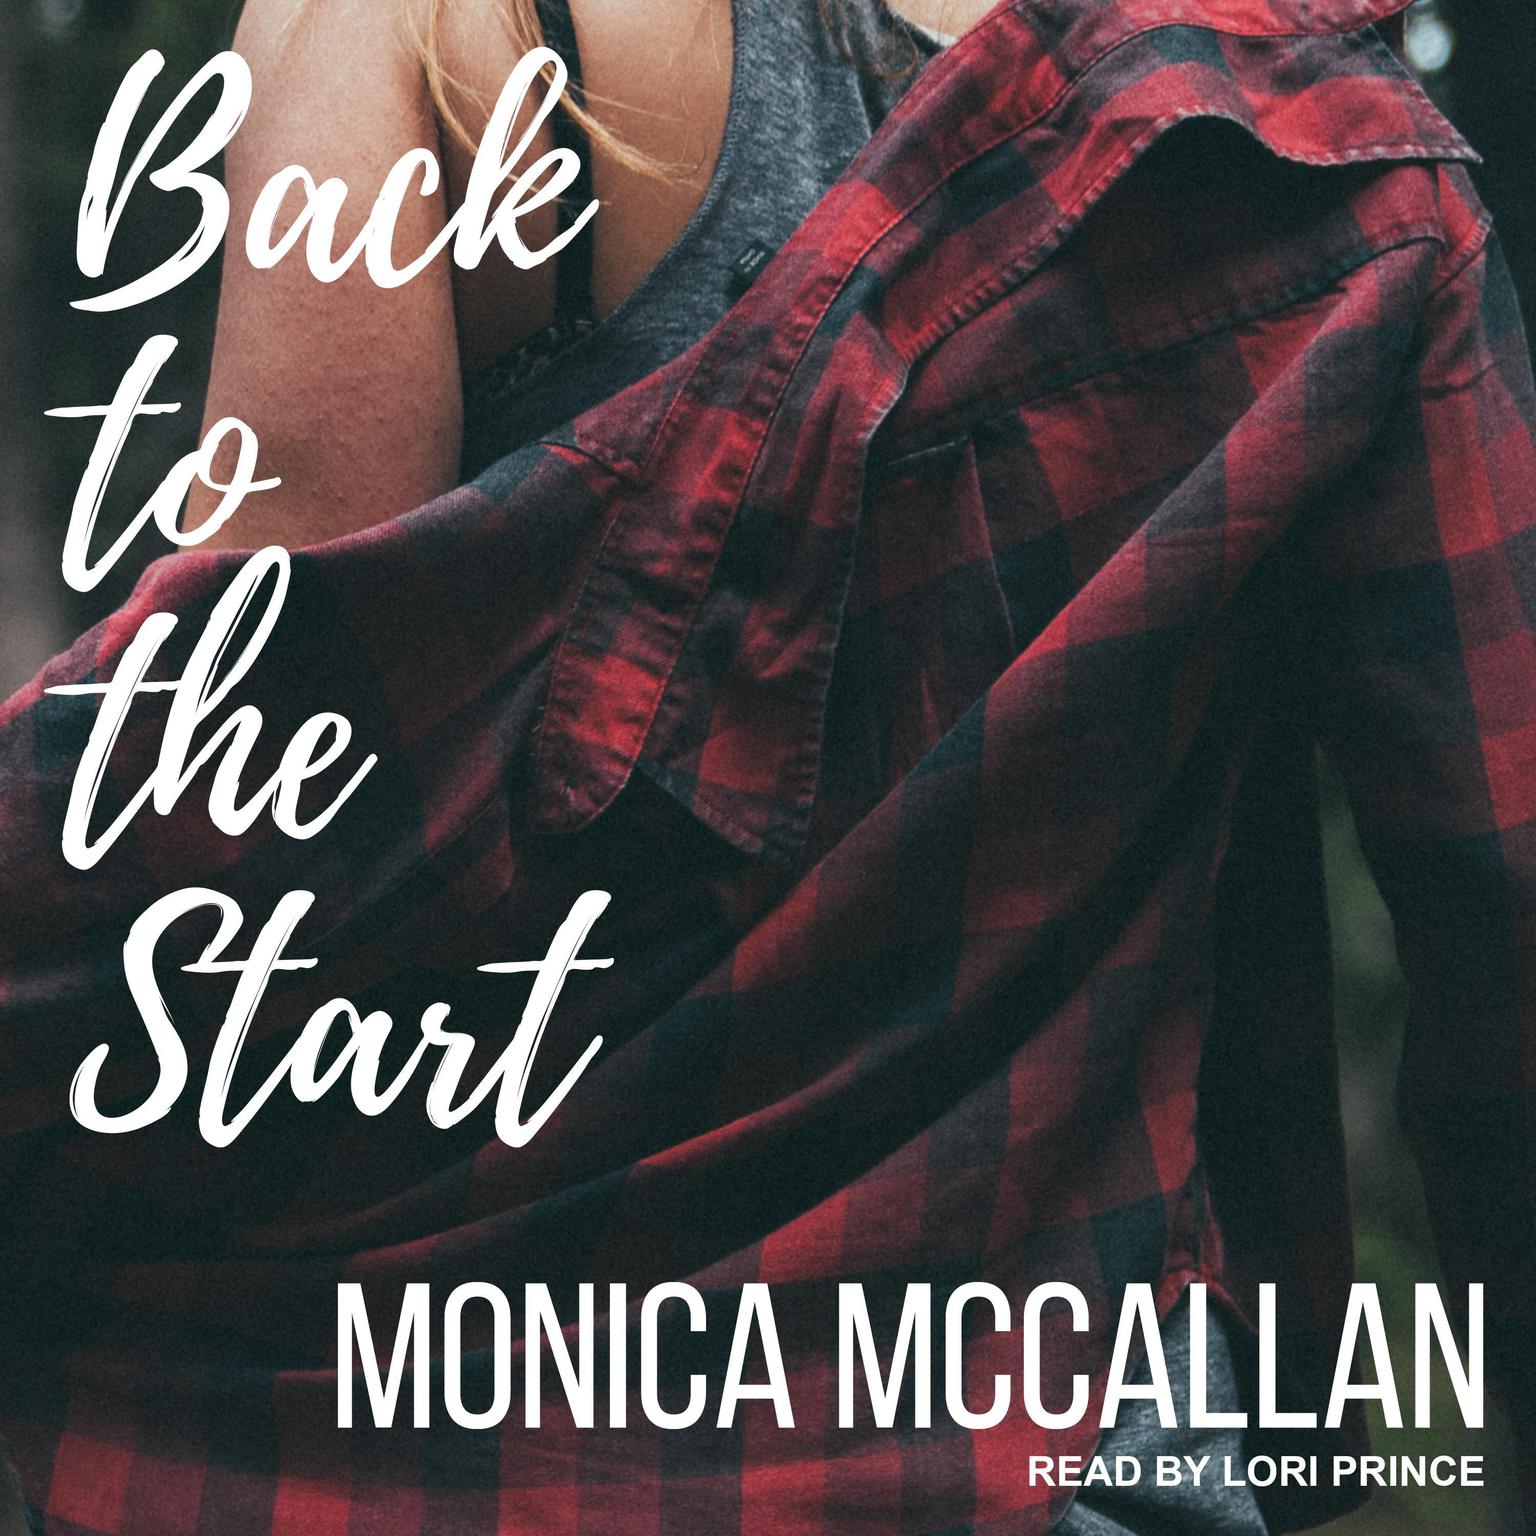 Monica McCallan, Lori Prince: Back to the Start (AudiobookFormat, 2018, self)